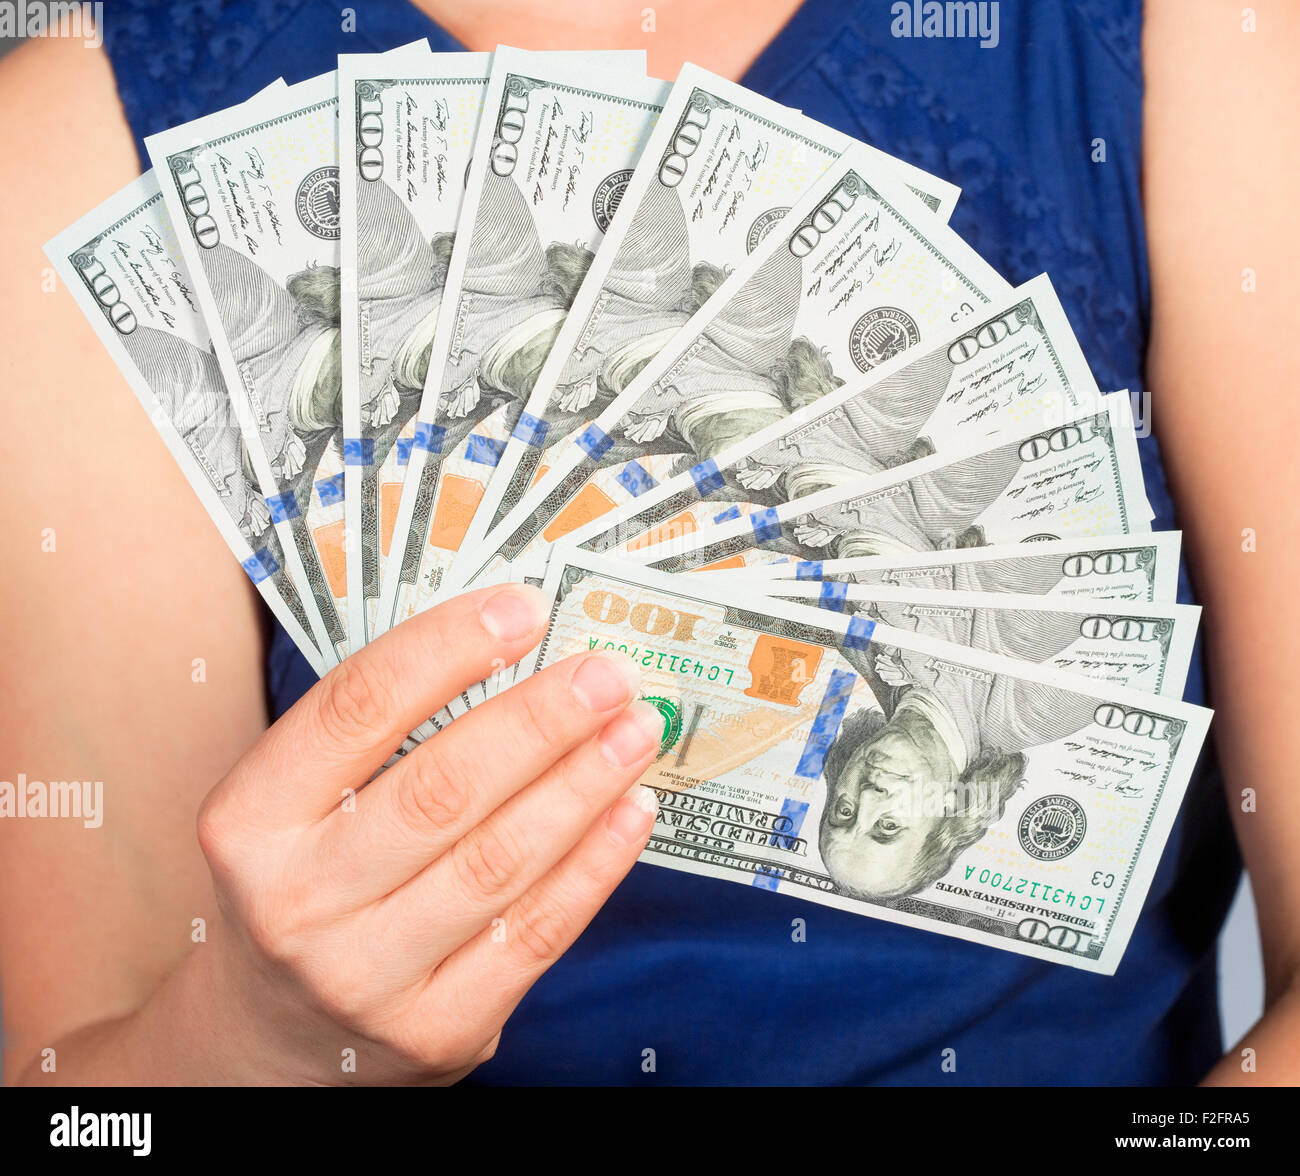 https://c8.alamy.com/comp/F2FRA5/woman-in-blue-dress-holding-new-100-us-dollar-bills-F2FRA5.jpg